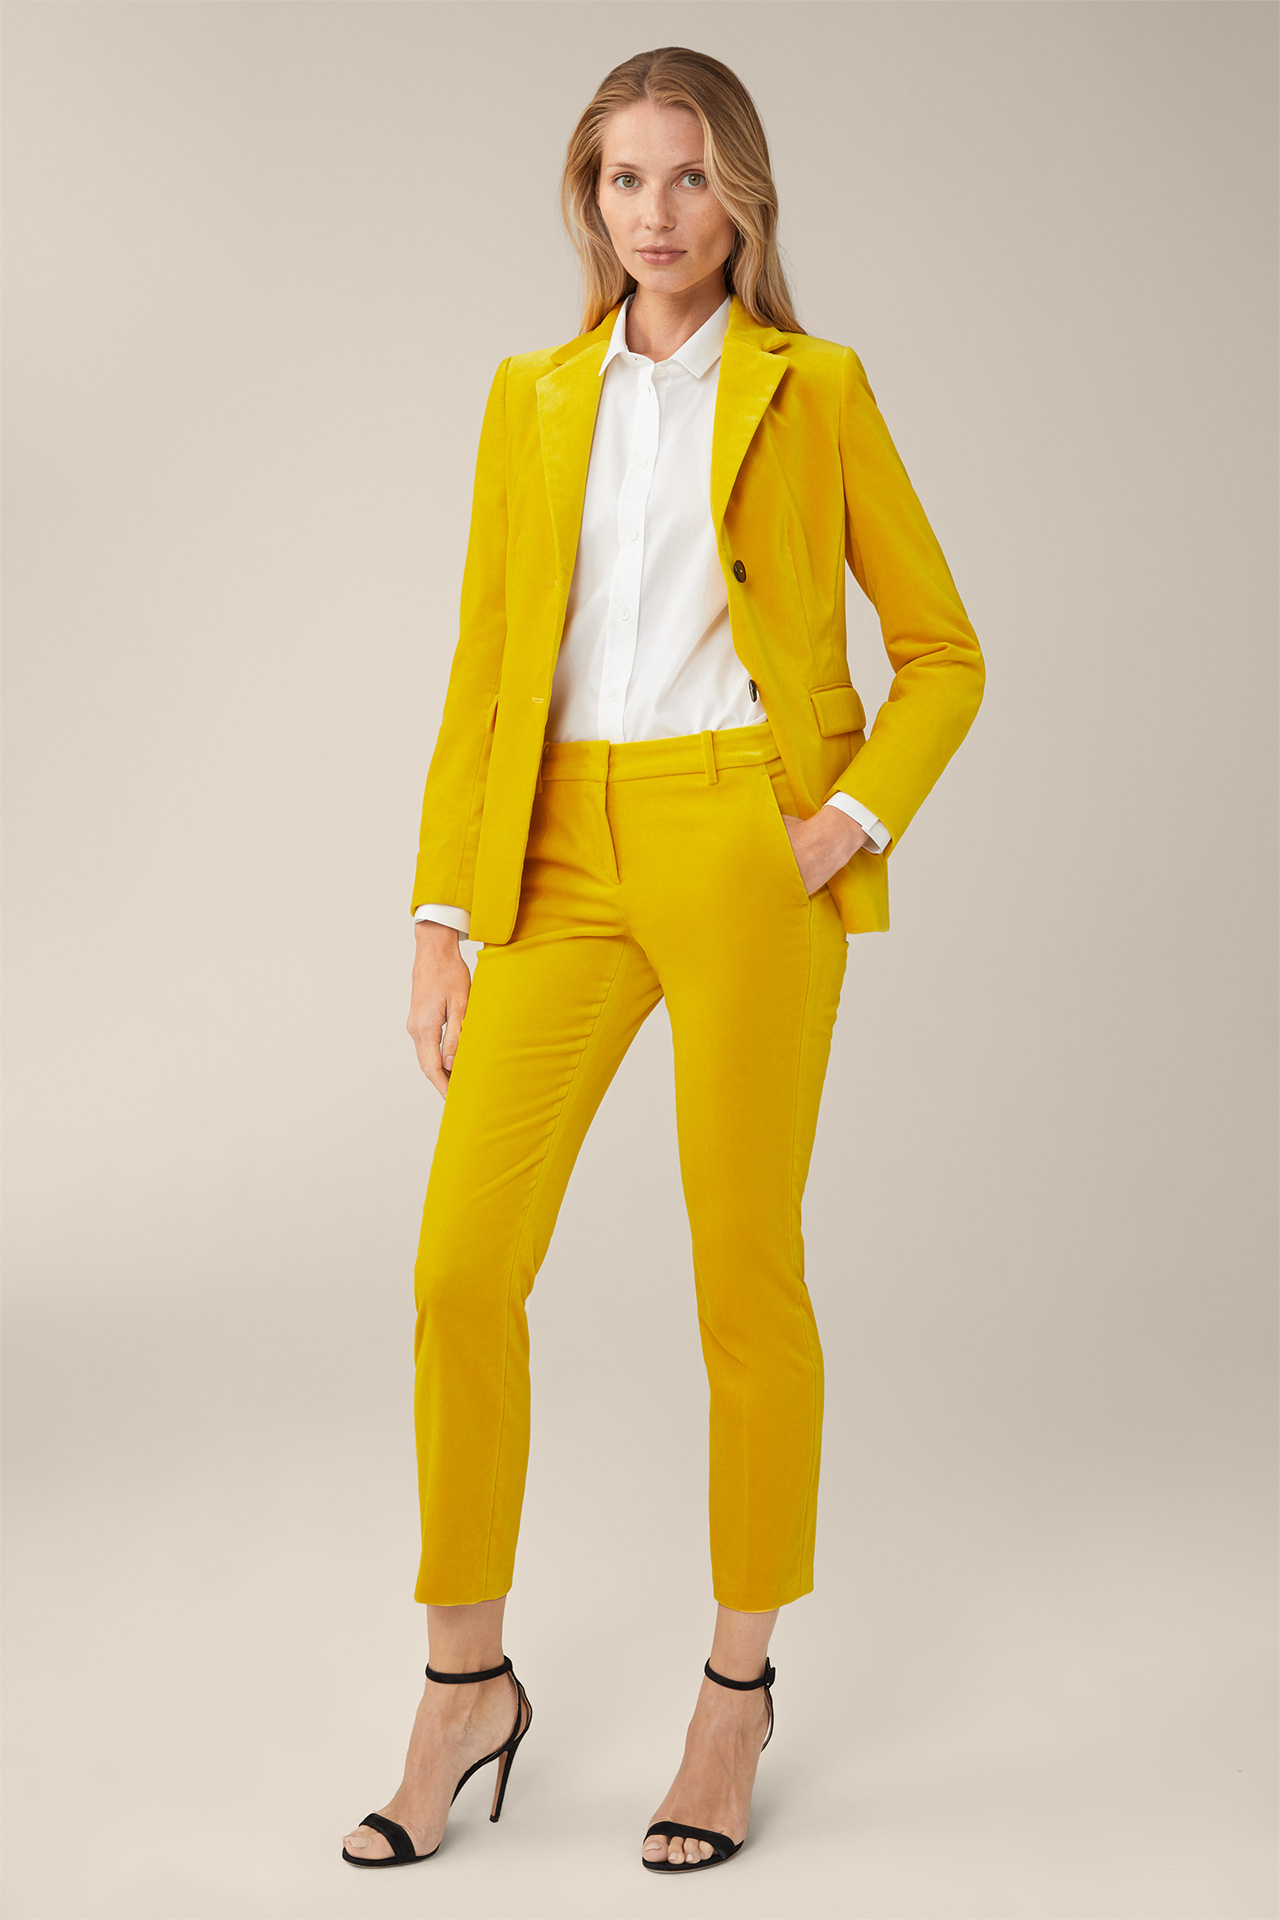 Samt-Anzug-Hose in Gelb